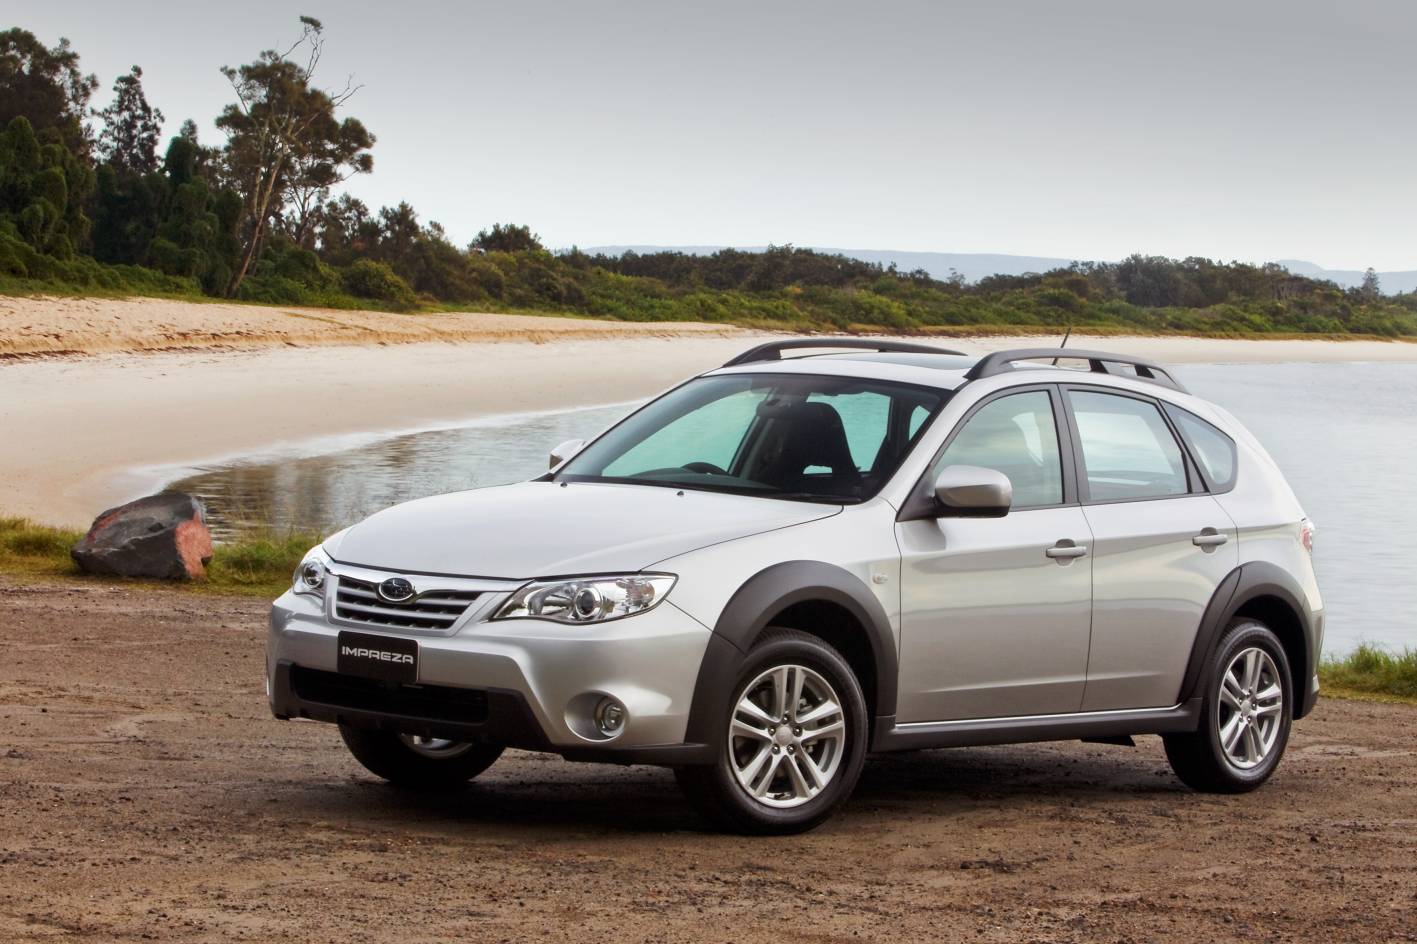 Subaru impreza xv review